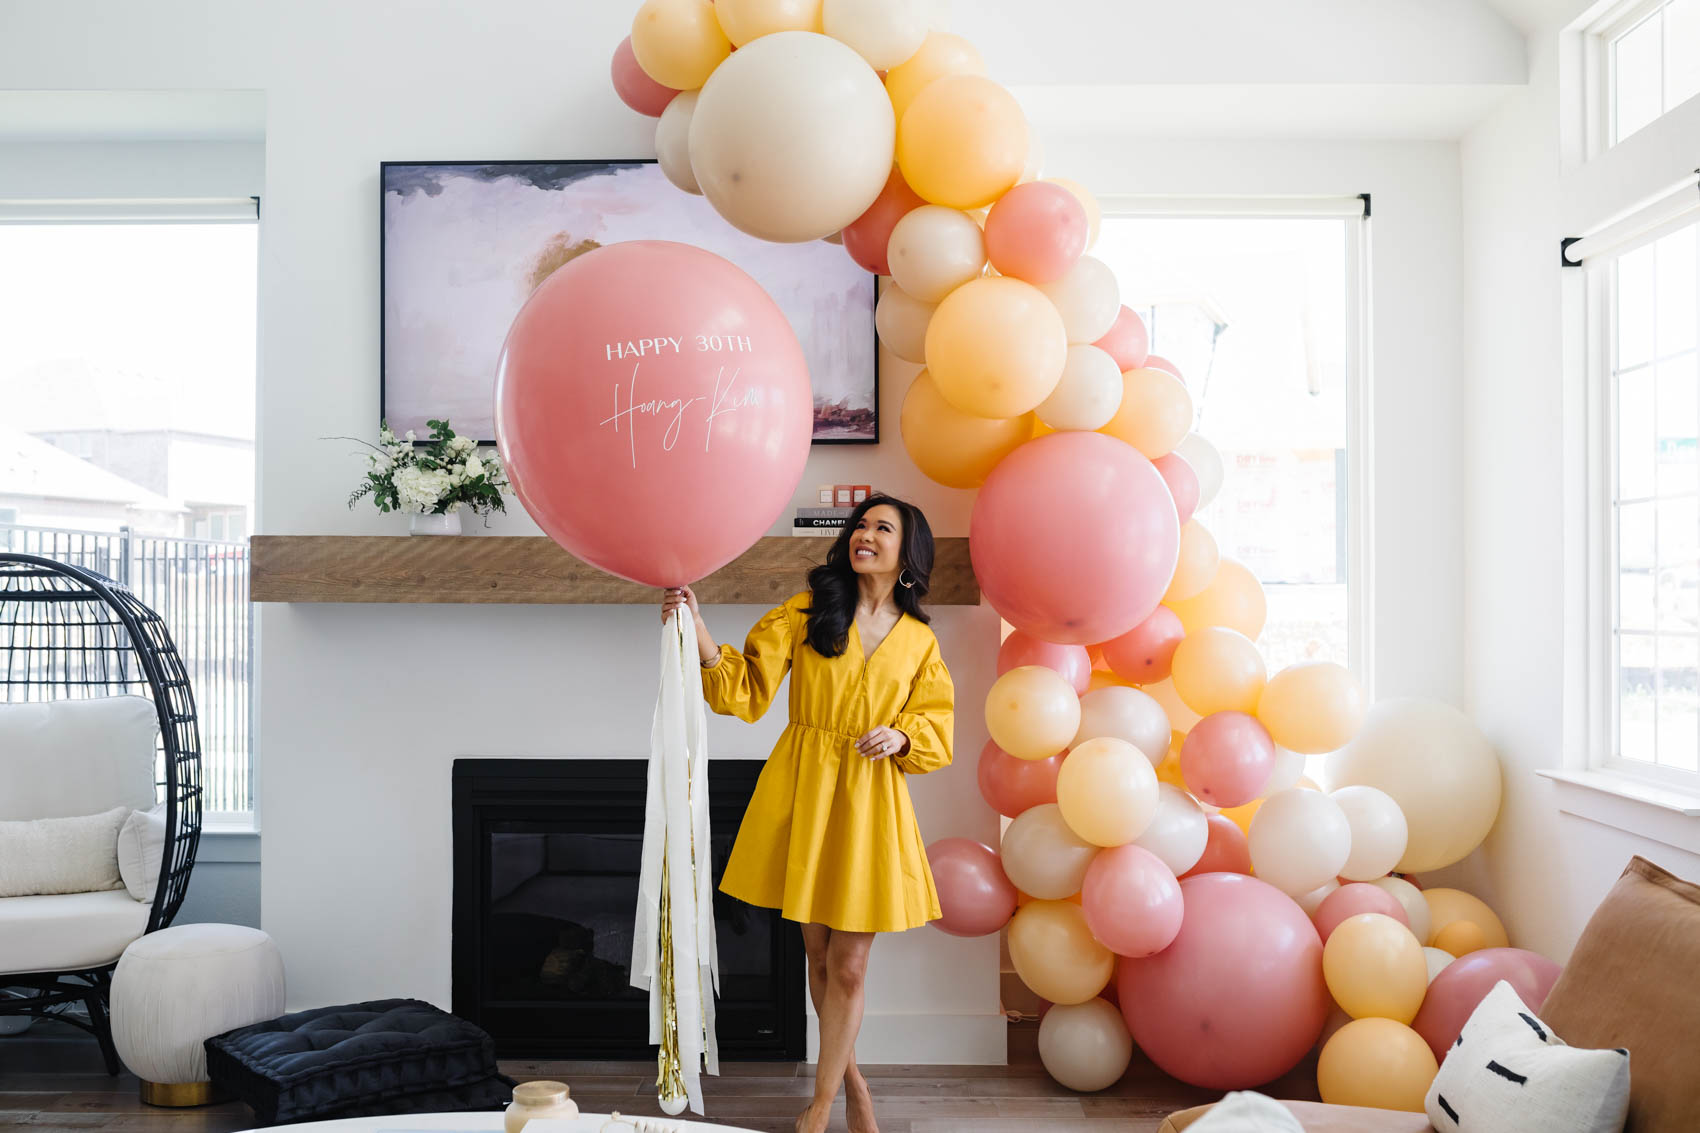 Hoang-Kim wears a yellow dress holding her custom jumbo balloon next to her organic balloon garland from Lushra